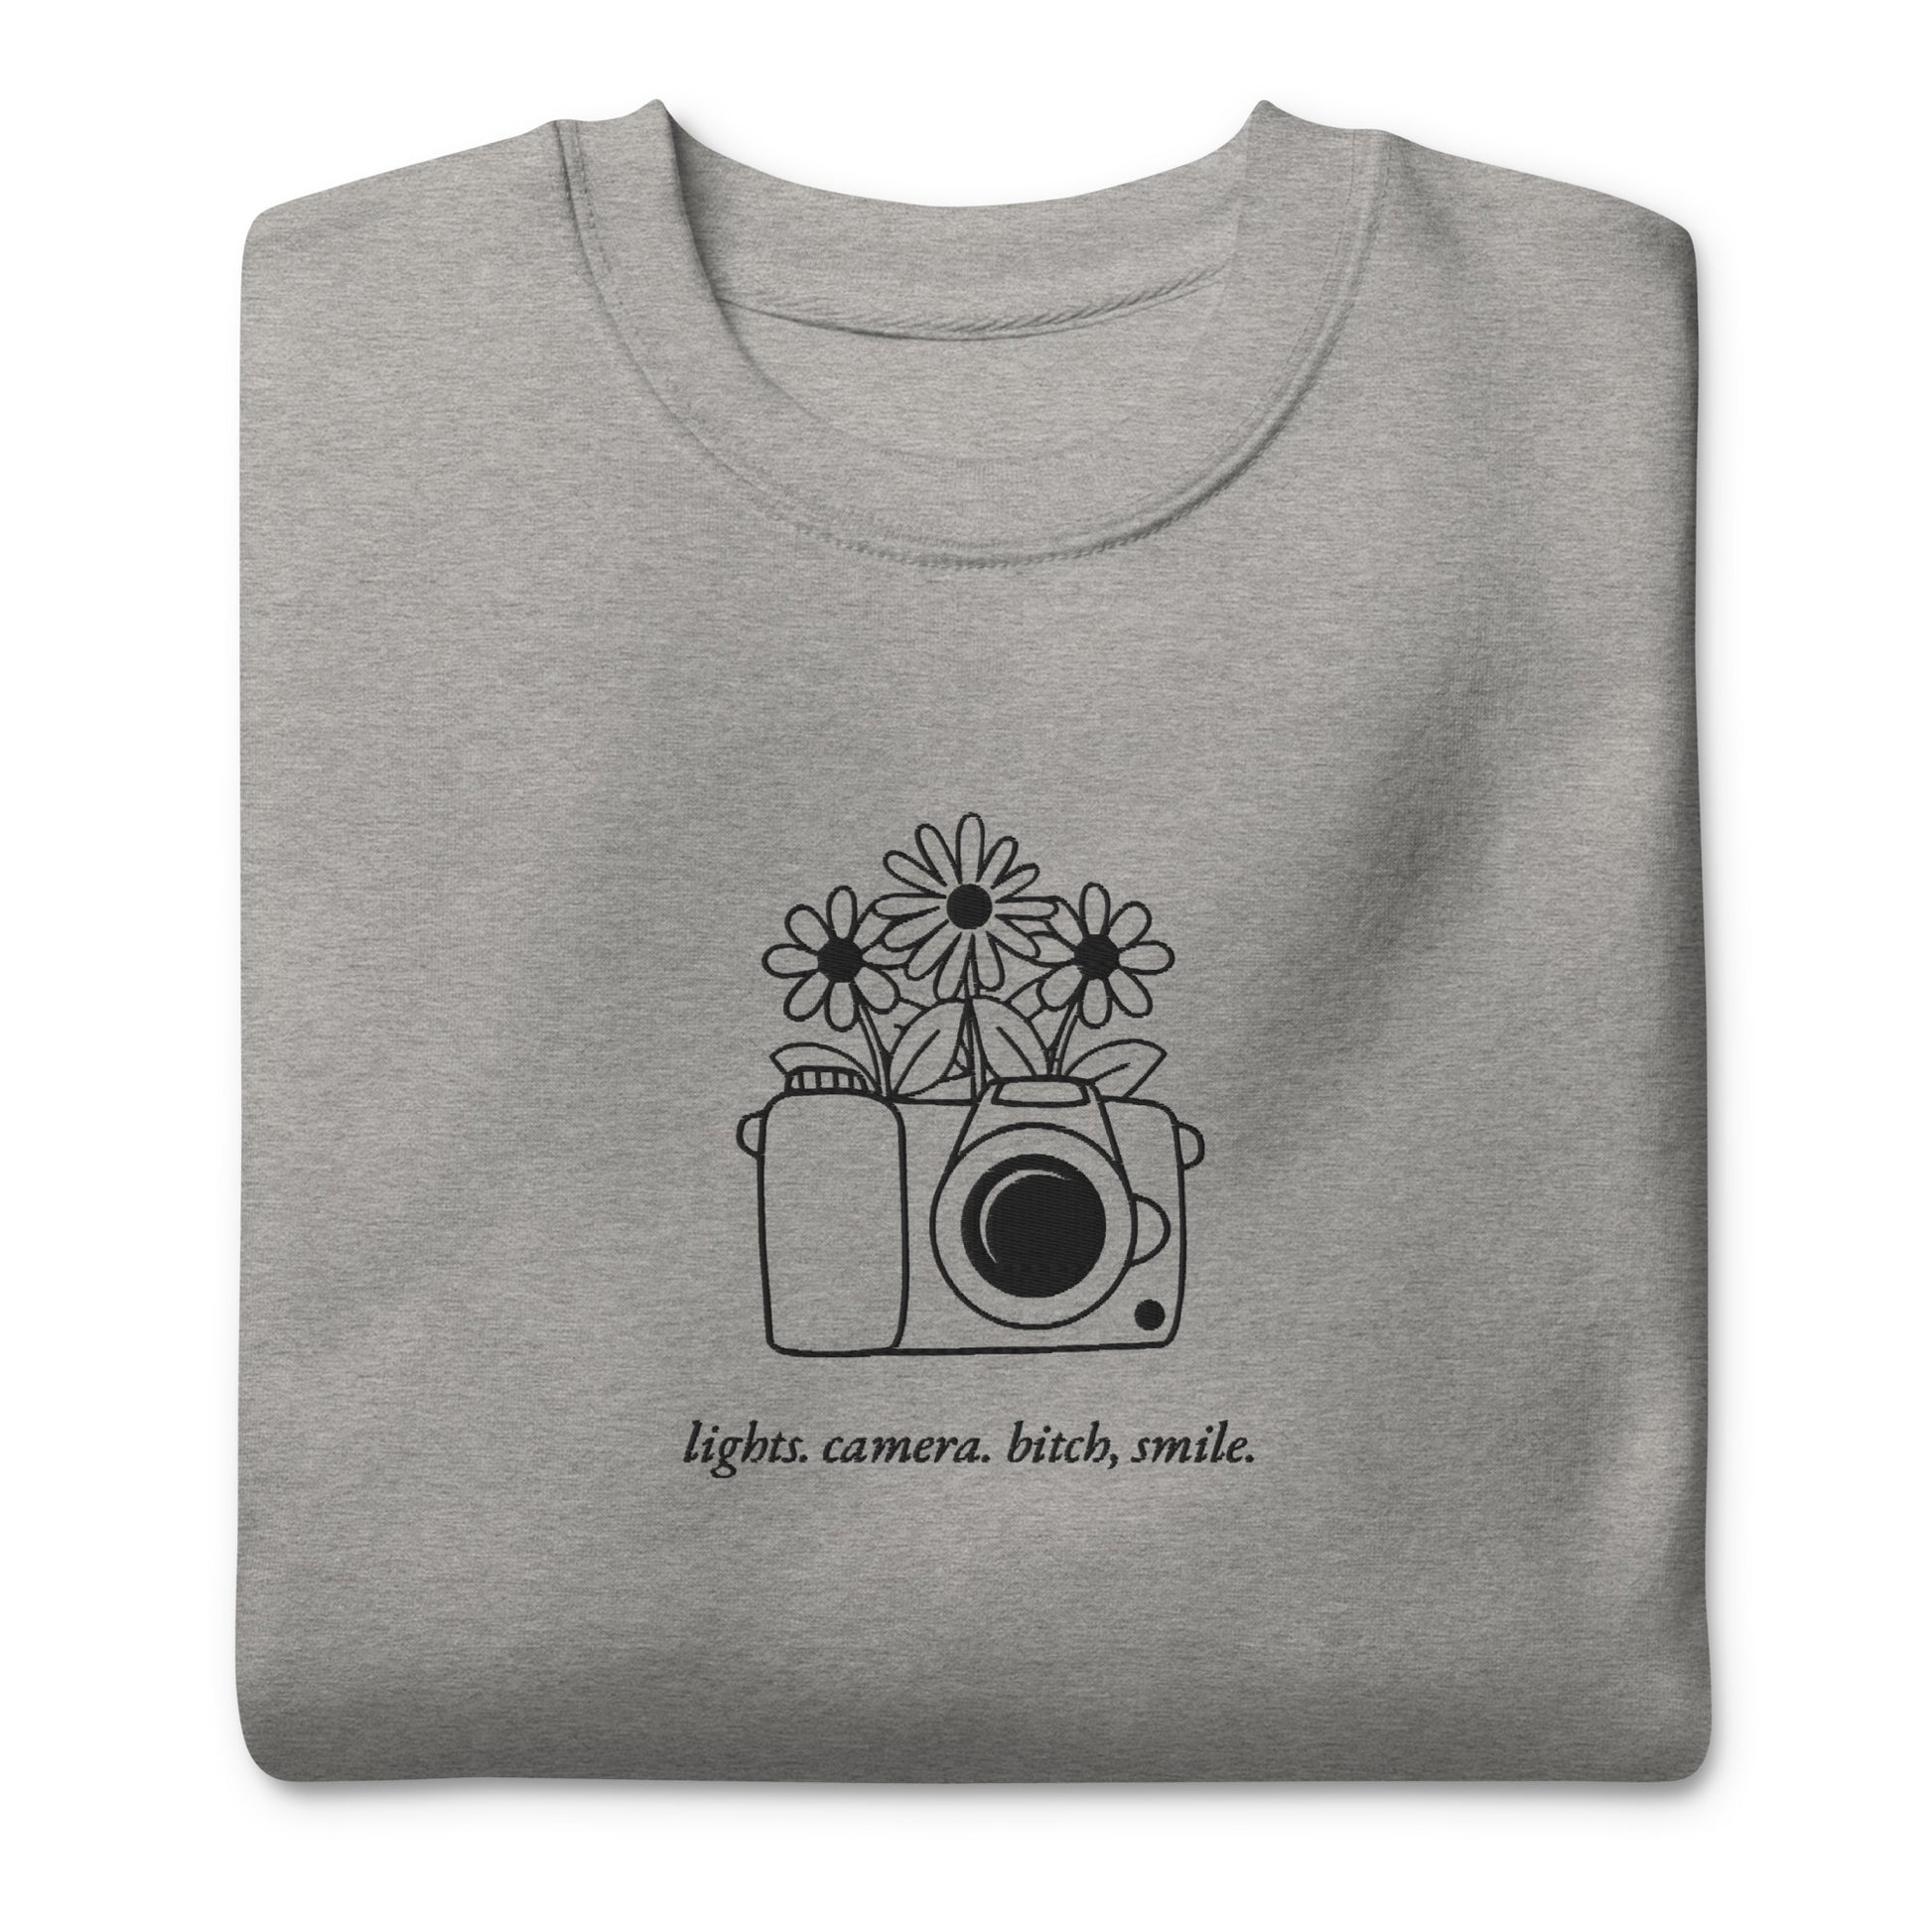 Lights, Camera, Bitch Smile. Embroidered Sweatshirts